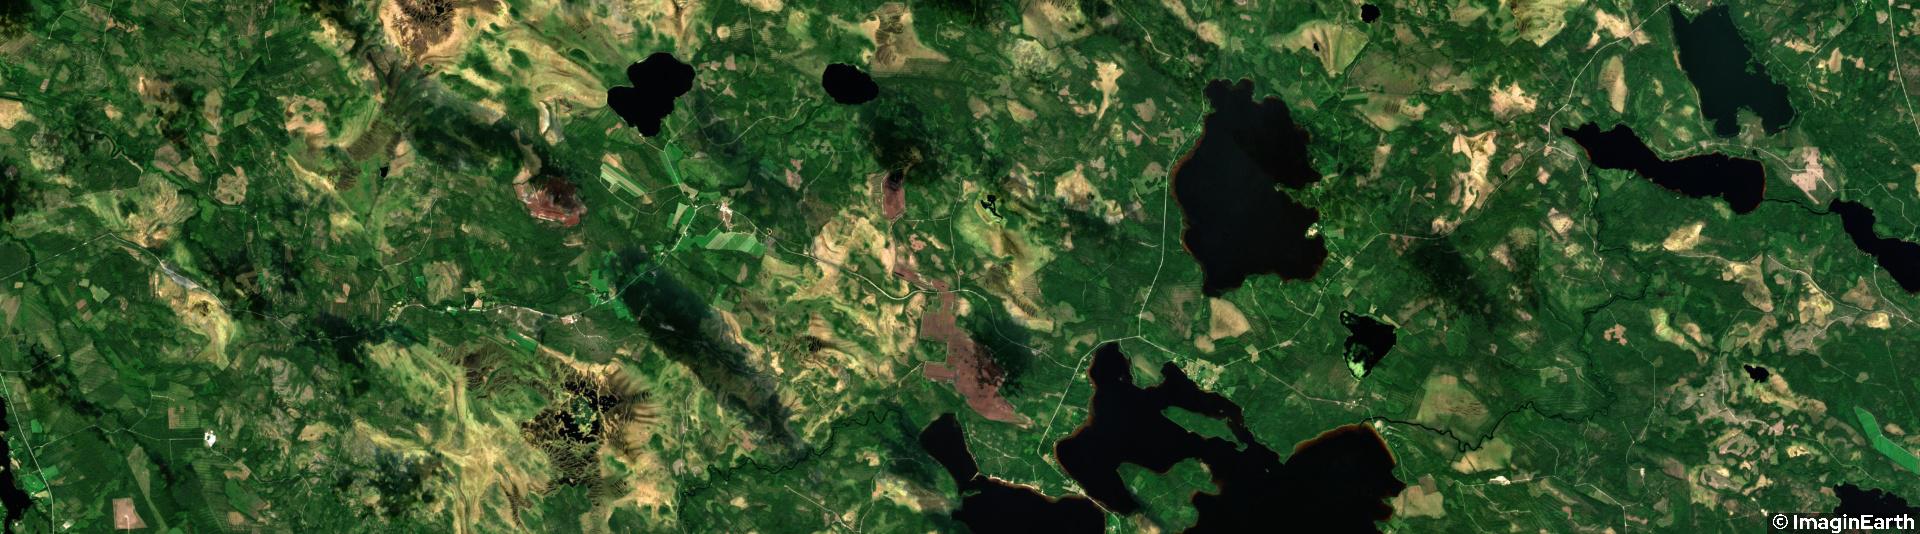 voyager en europe du nord, photo satellite, finlande